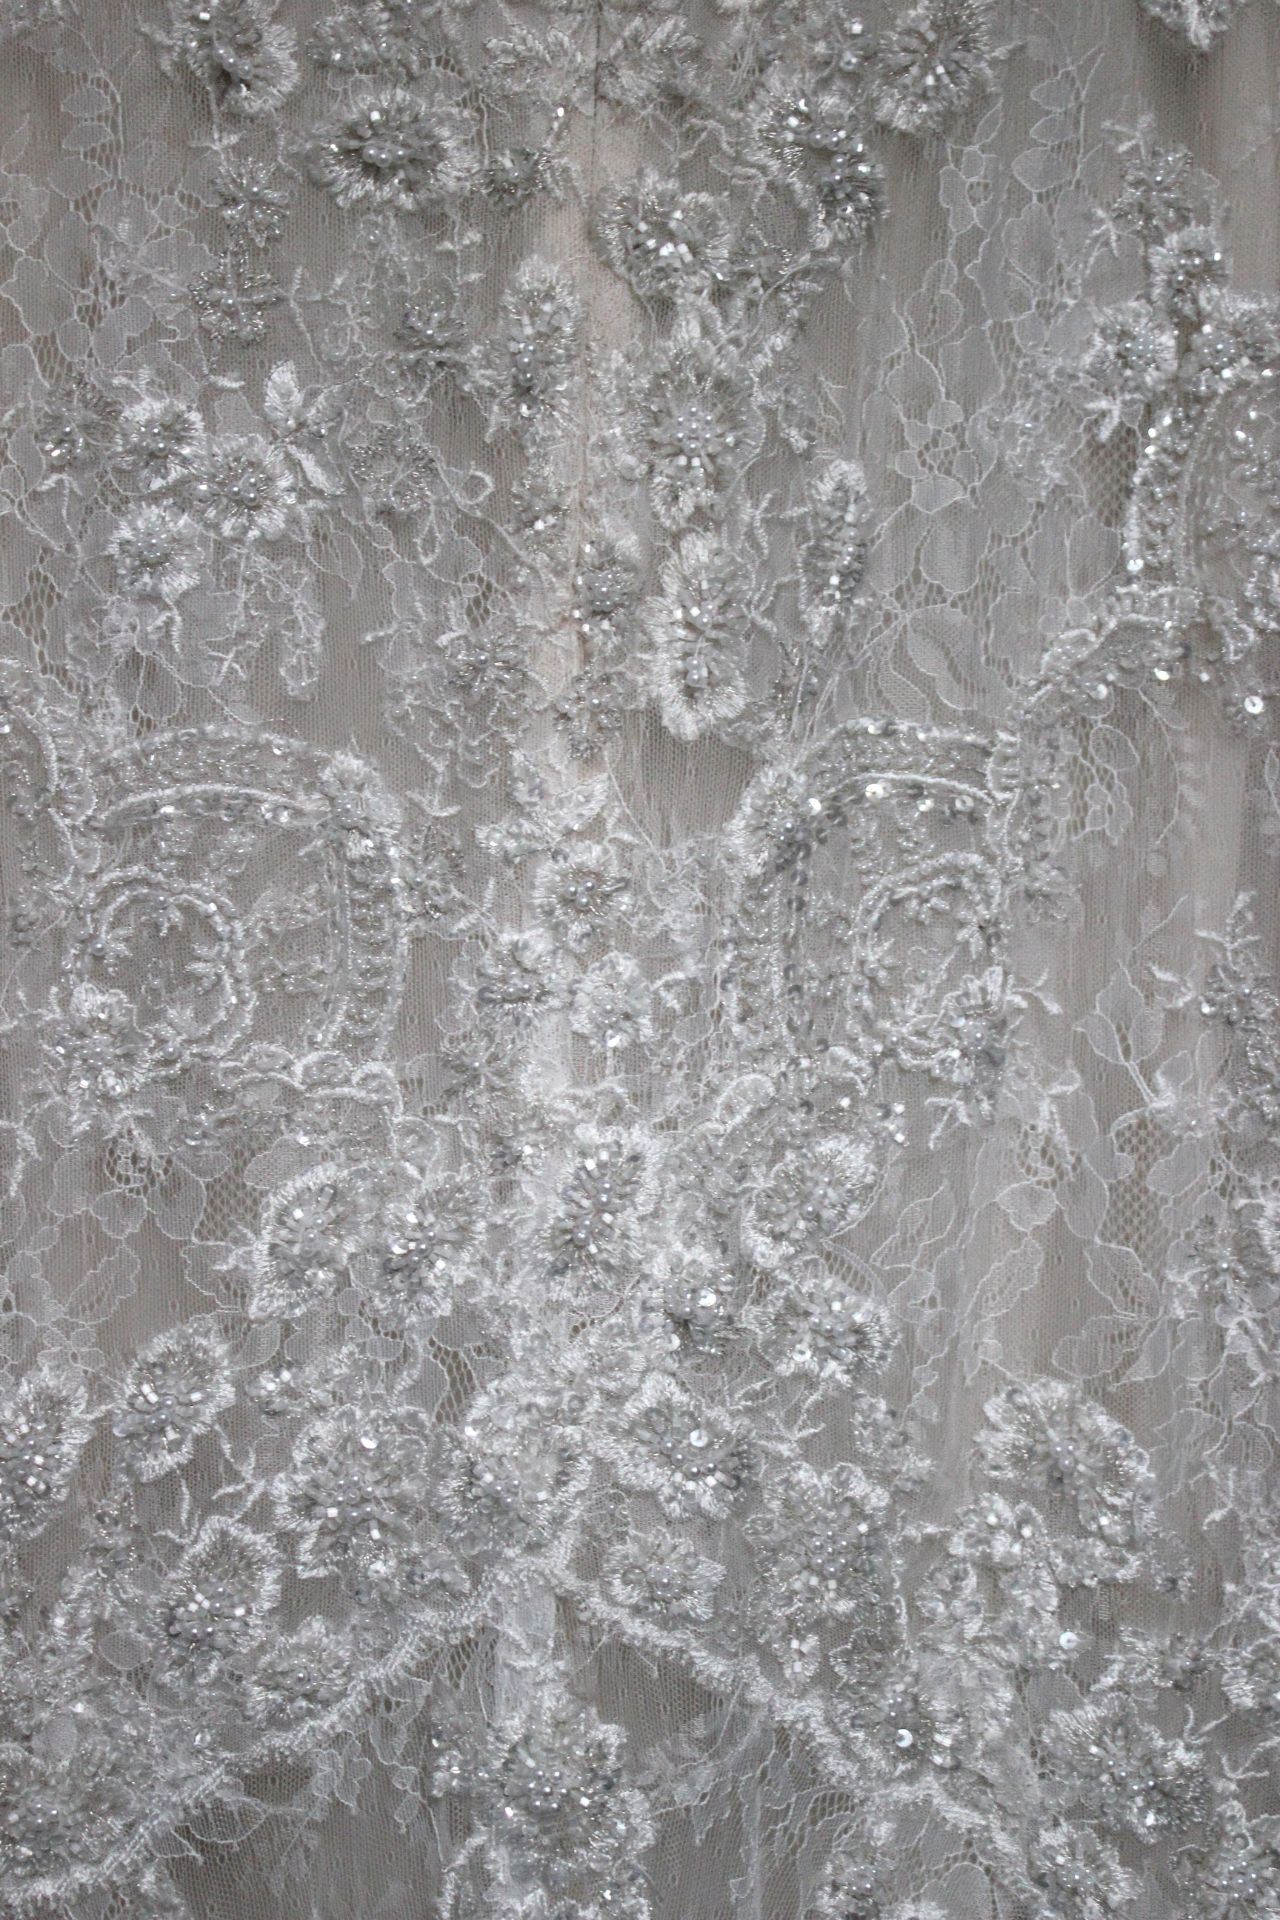 1 x REBECCA INGRAM 'Gabriella' Sleeveless Lace And Beaded Designer Wedding Dress RRP £1,400 UK12 - Image 5 of 6